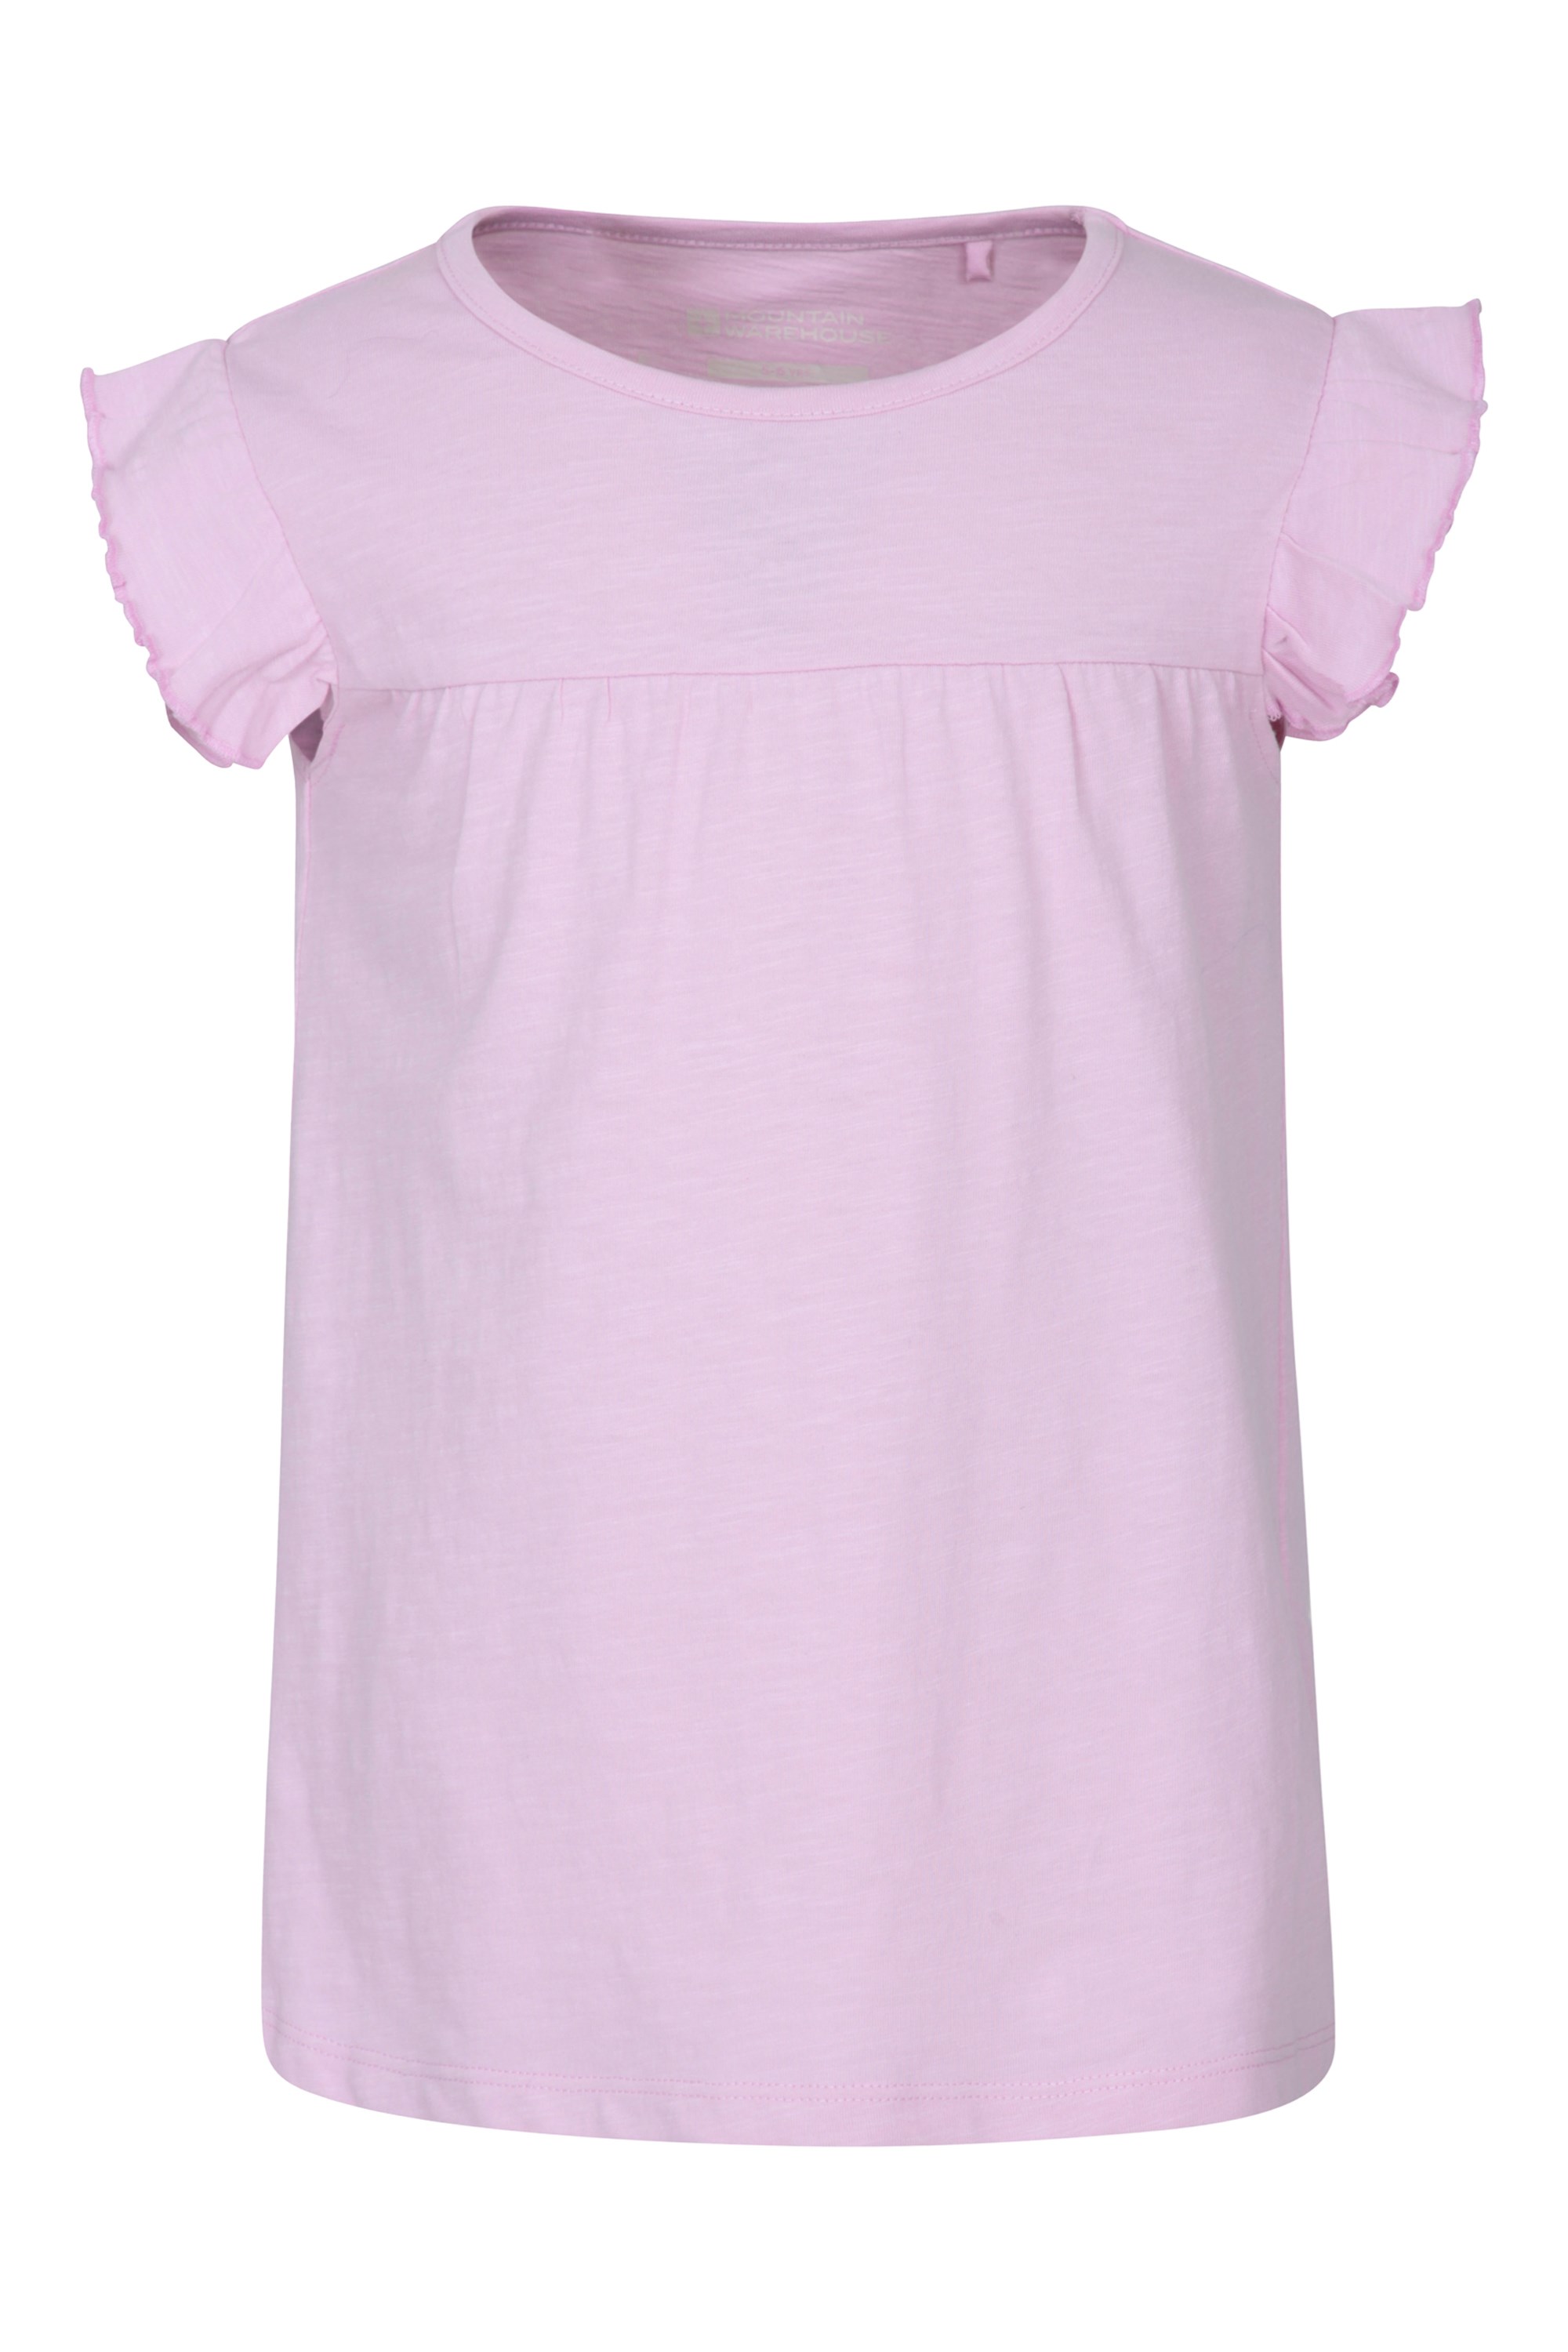 Primark T-Shirt Rosa Rabatt 99 % KINDER Hemden & T-Shirts Rüschen 